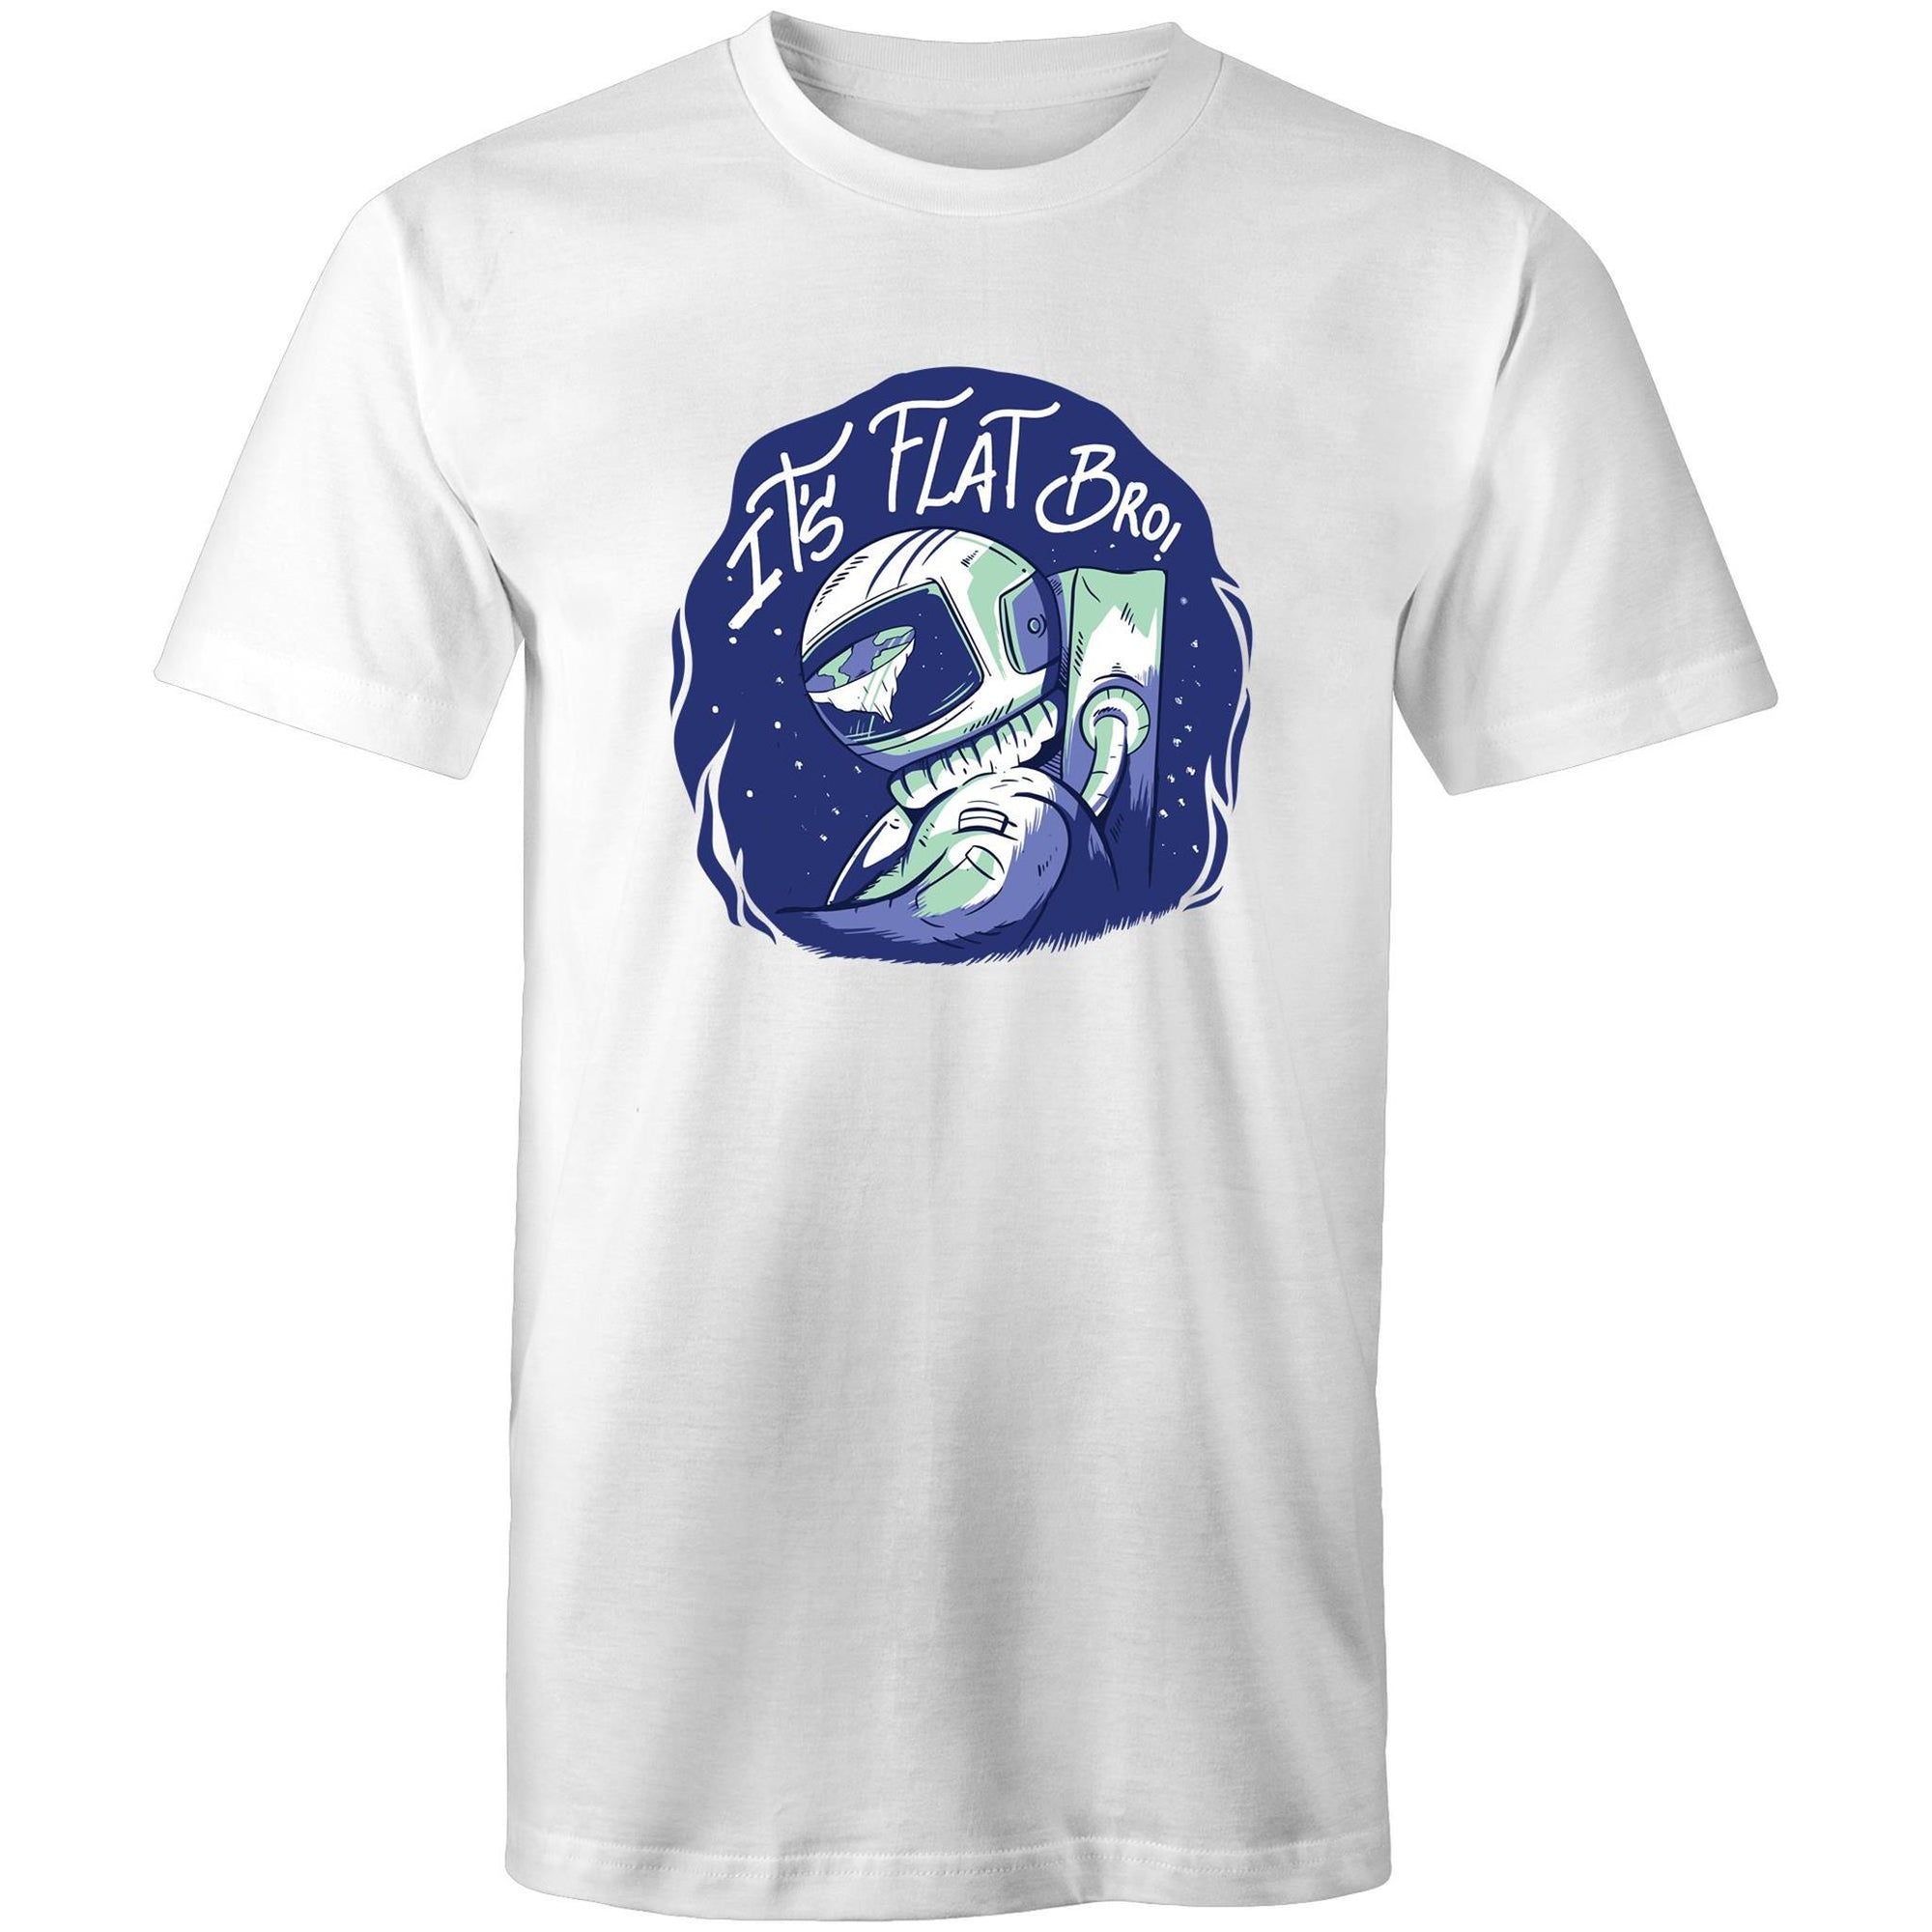 Men's Flat Earth T-shirt